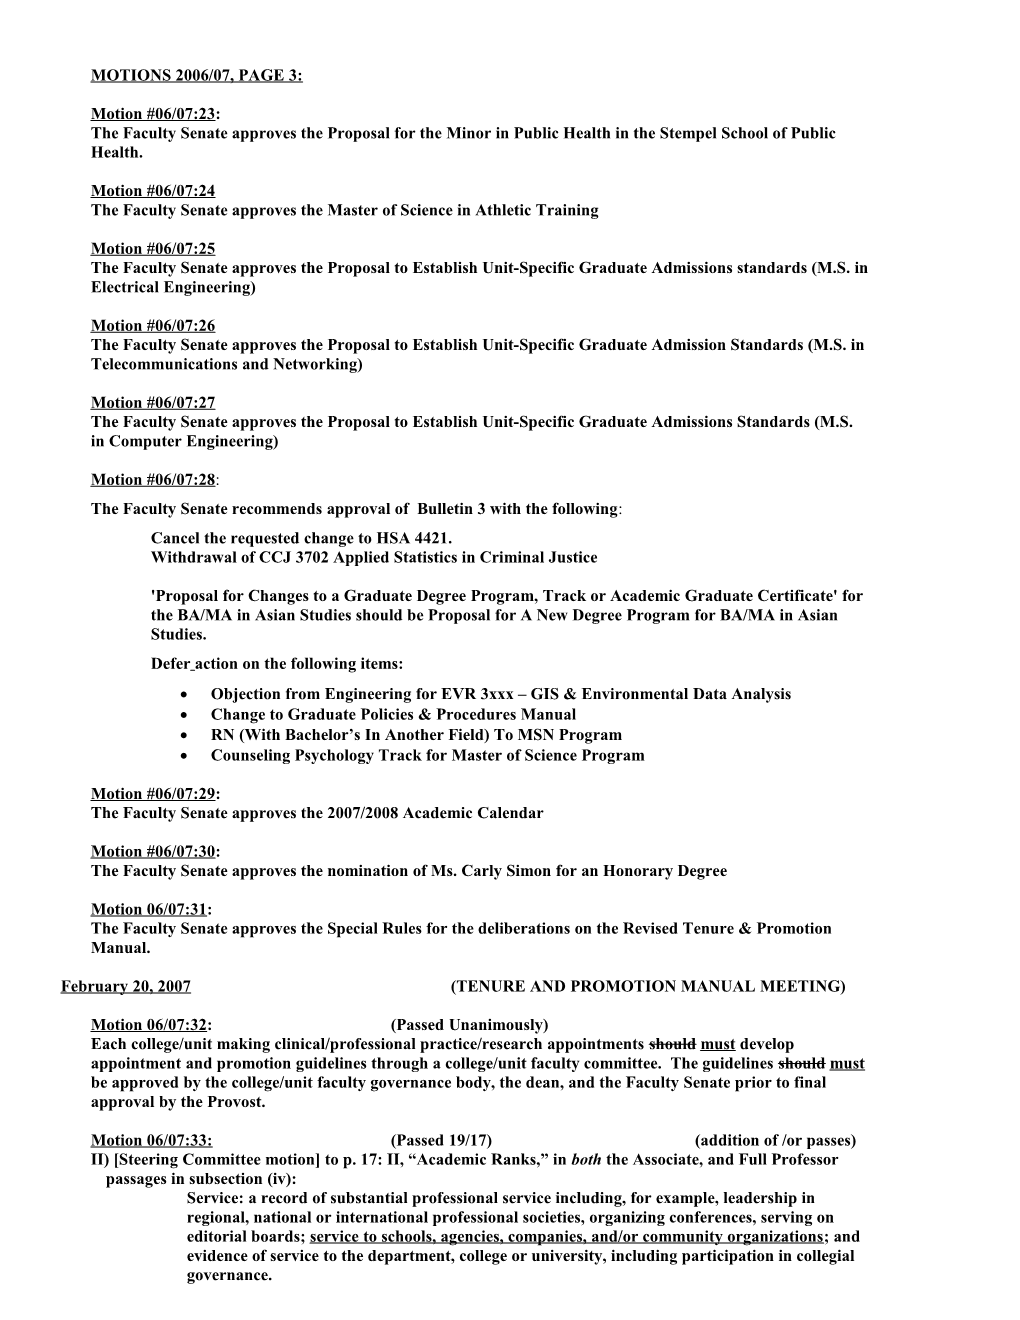 Faculty Senate Motions 2006-2007